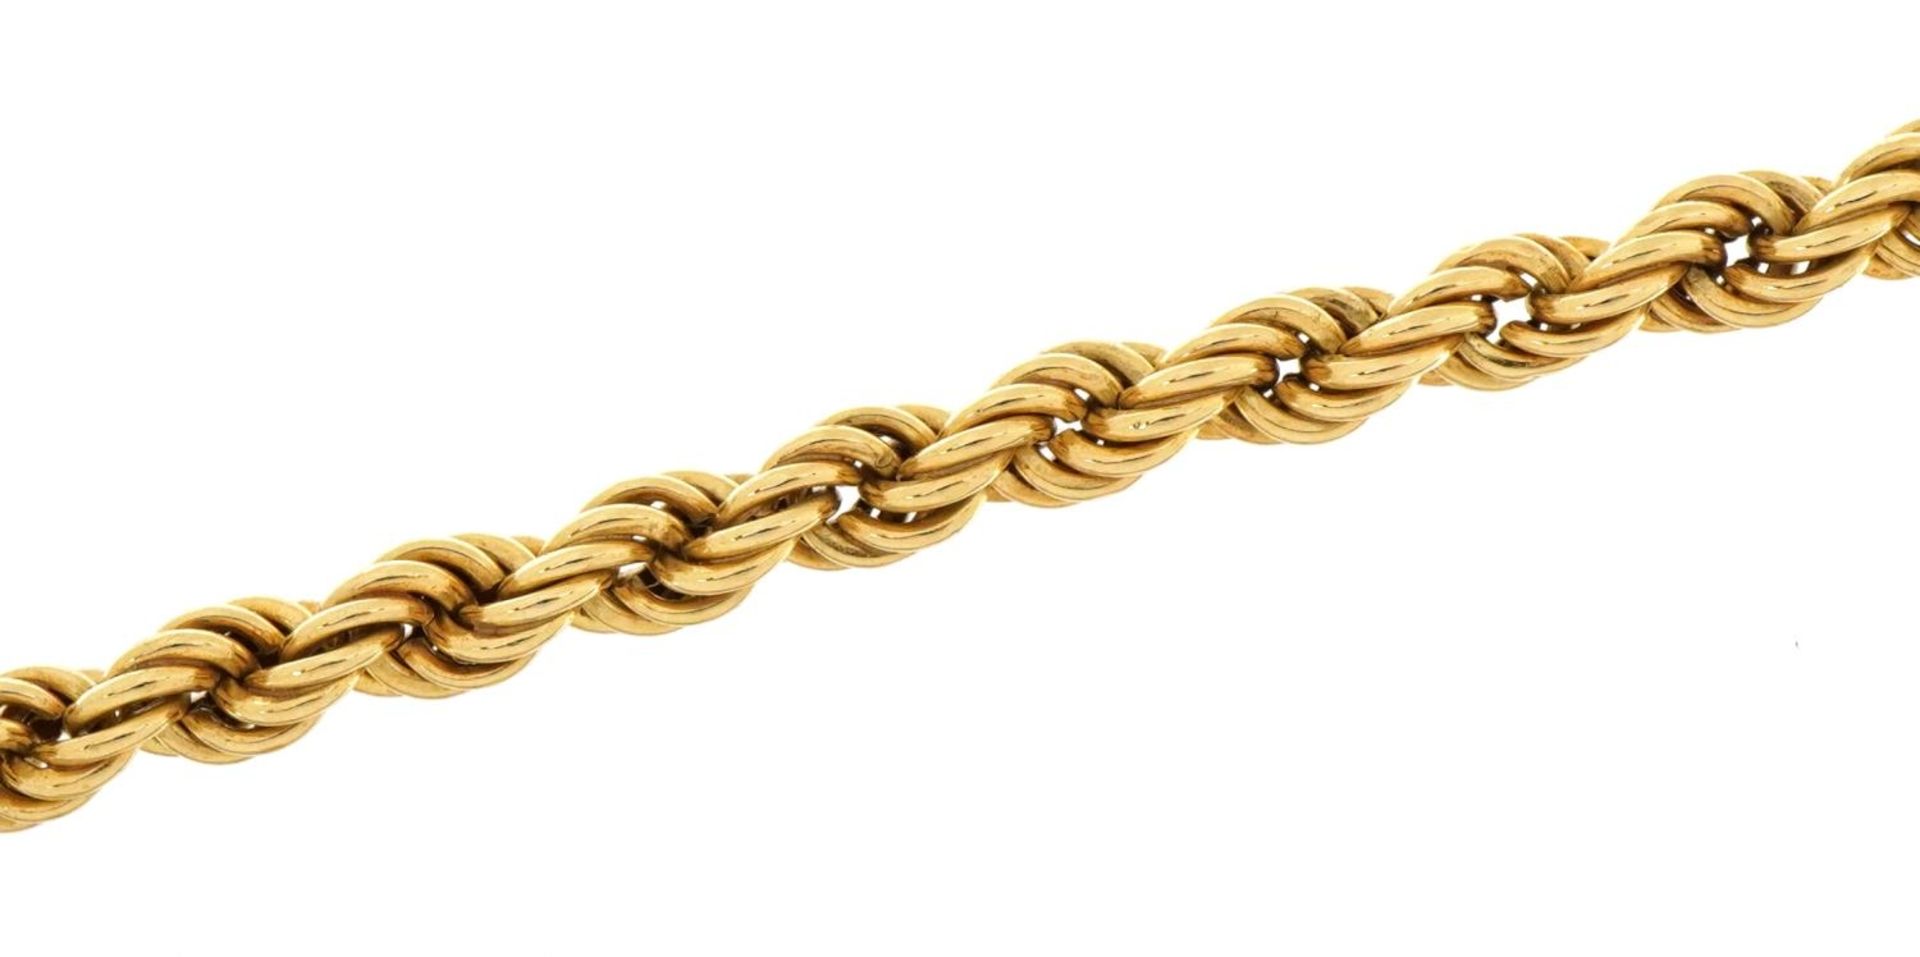 9ct gold rope twist bracelet, 21.5cm in length, 3.5g